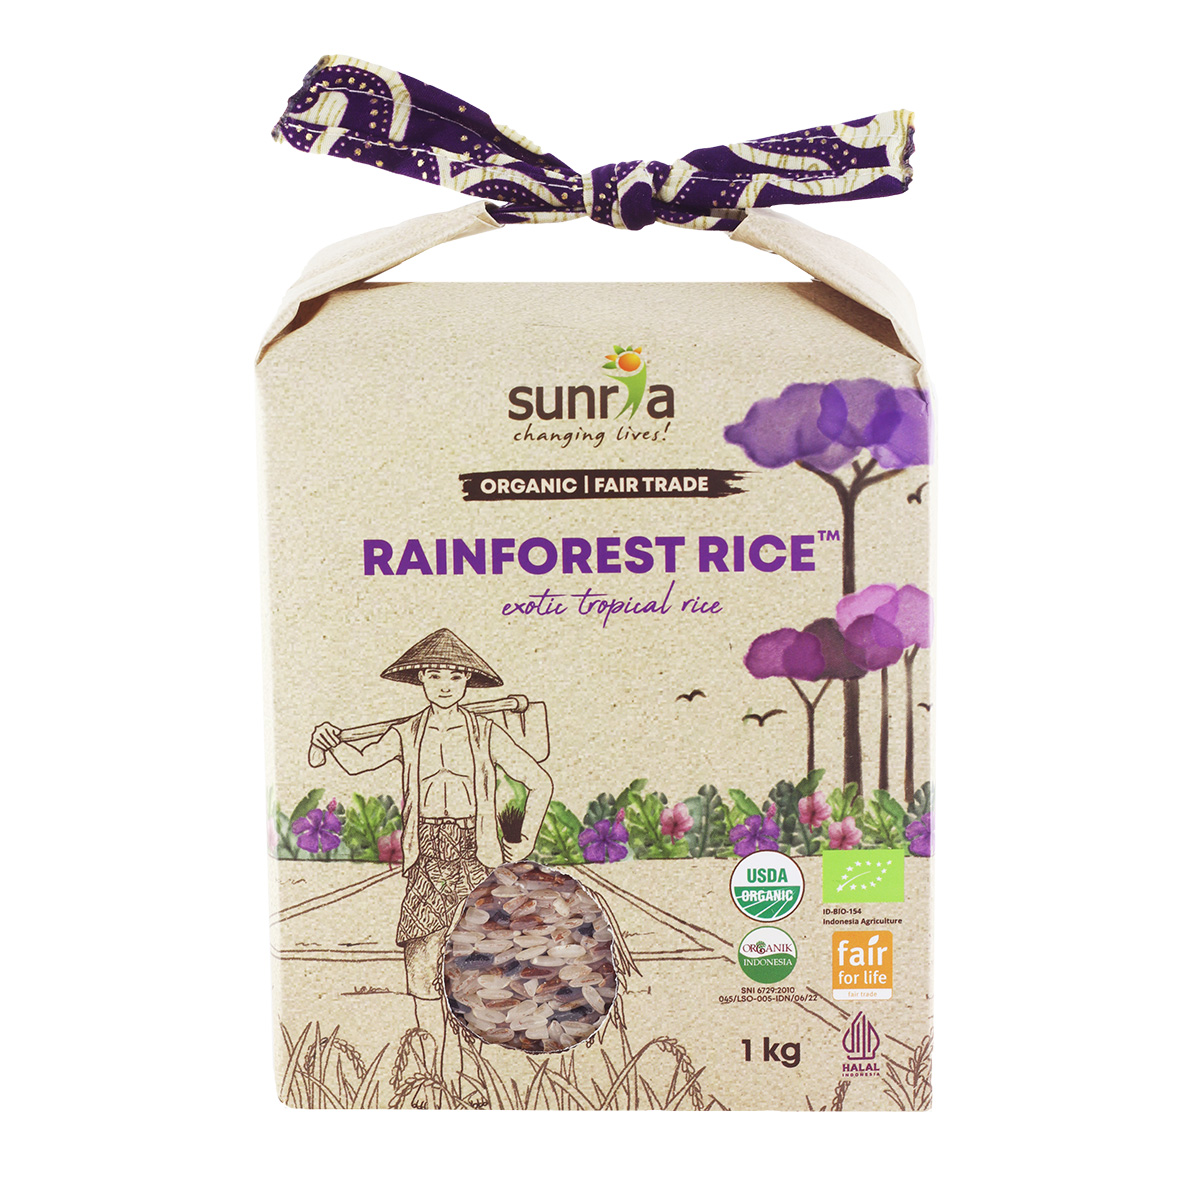 Sunria Rainforest Rice 1kg